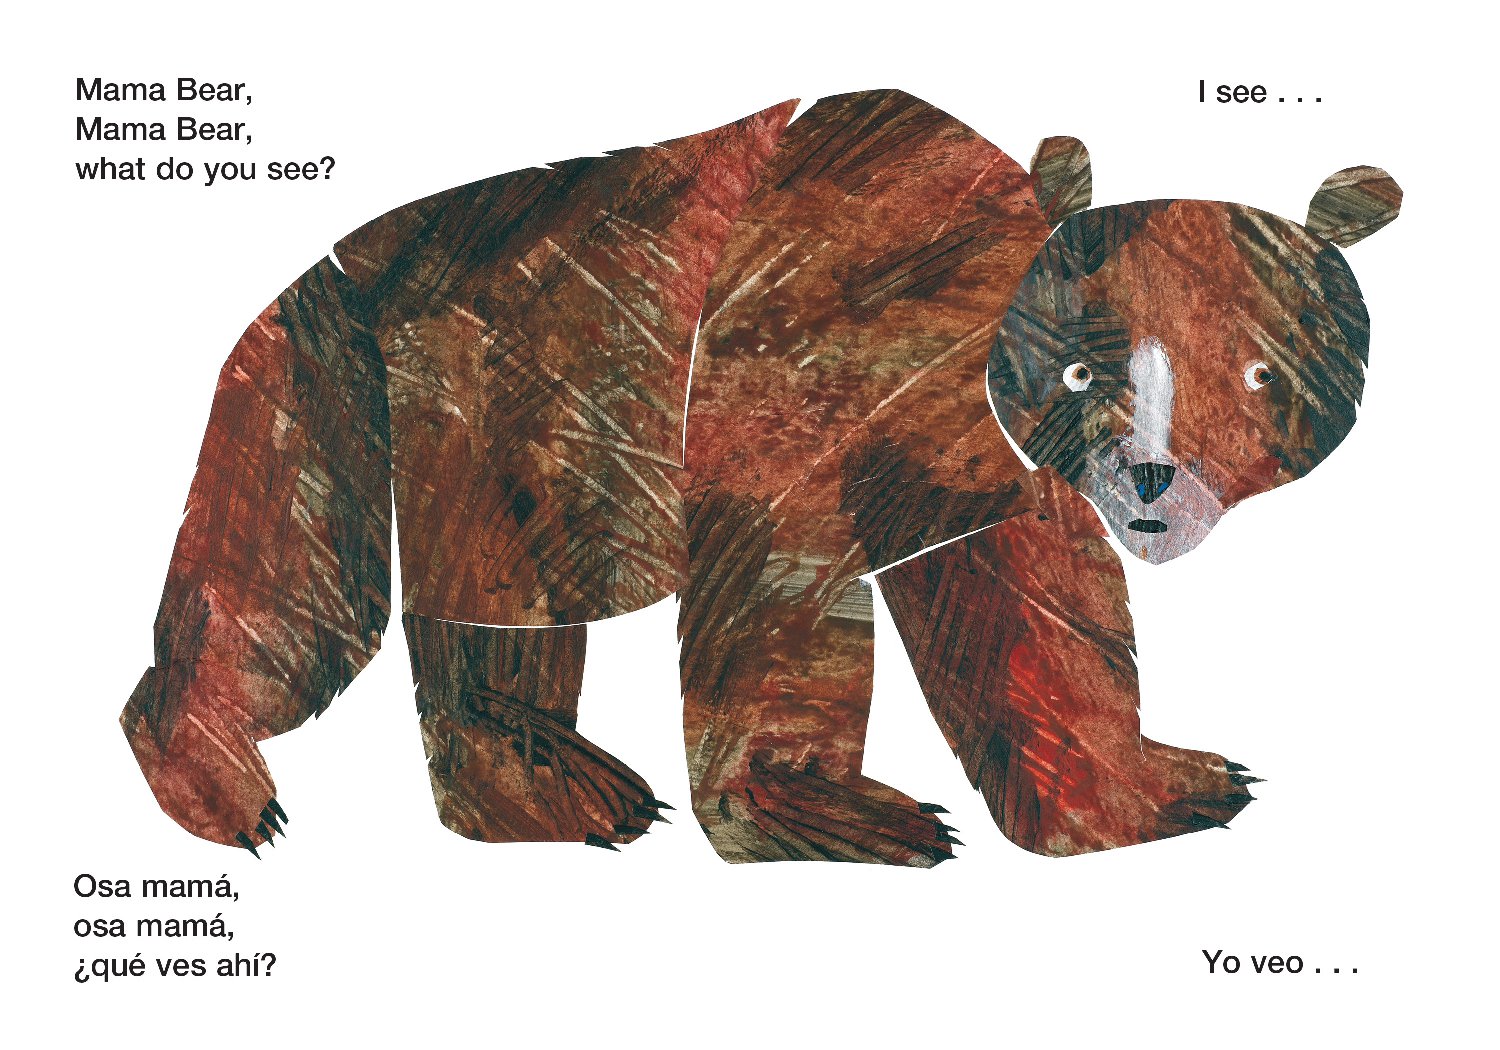 Baby Bear, Baby Bear, What Do You See? / Oso bebe, oso bebe, que ves ahi? (Bilingual board book - English / Spanish)